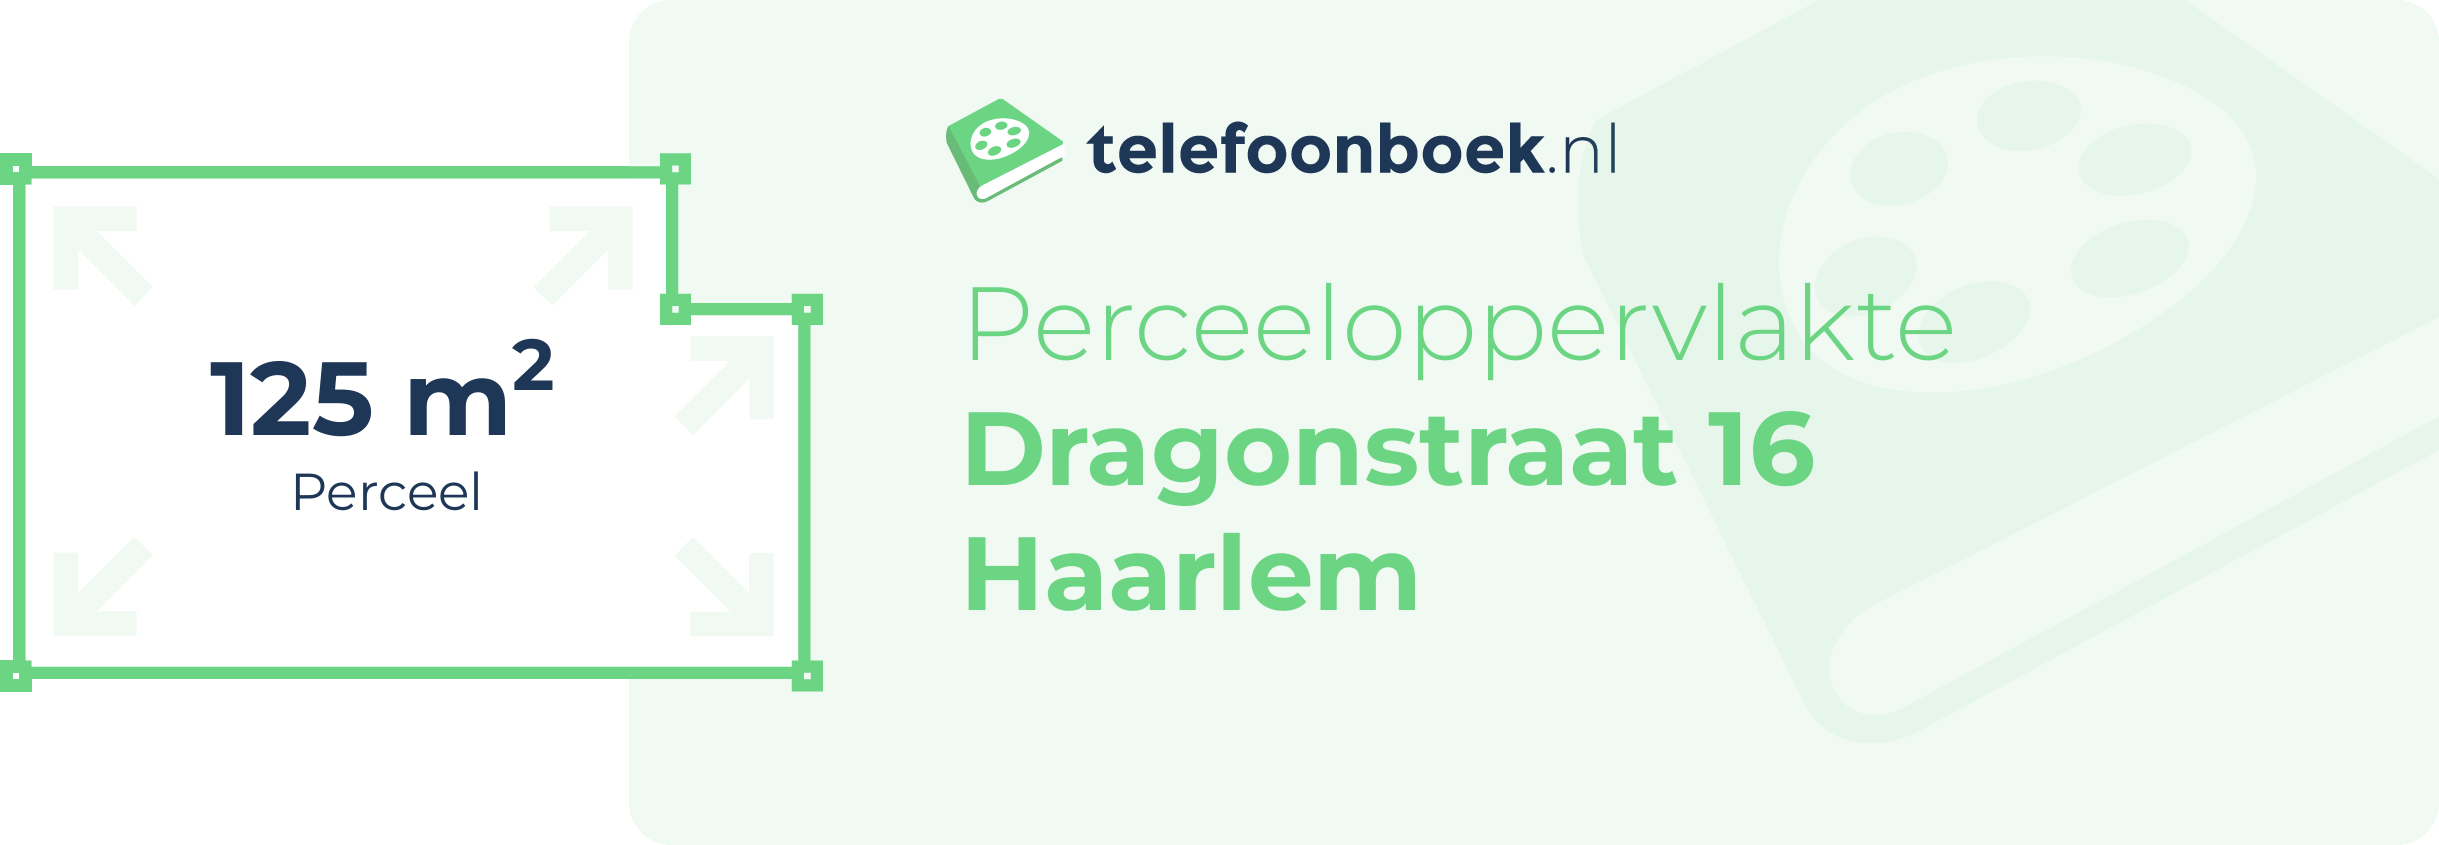 Perceeloppervlakte Dragonstraat 16 Haarlem